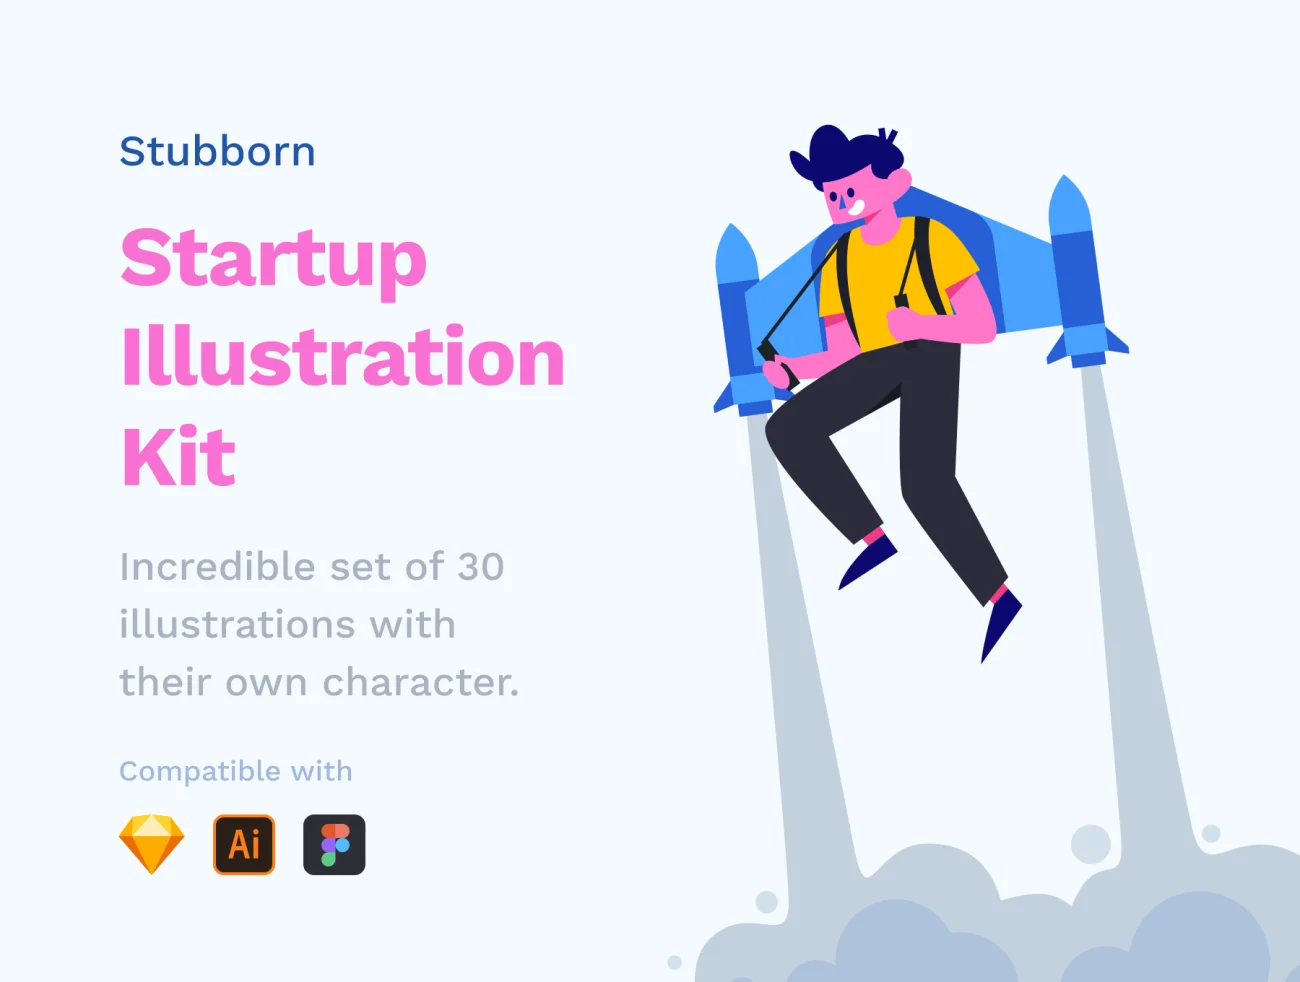 Stubborn Illustrations 状态页插图-UI/UX、人物插画、场景插画、插画、插画风格、概念创意、状态页、线条手绘、趣味漫画-到位啦UI